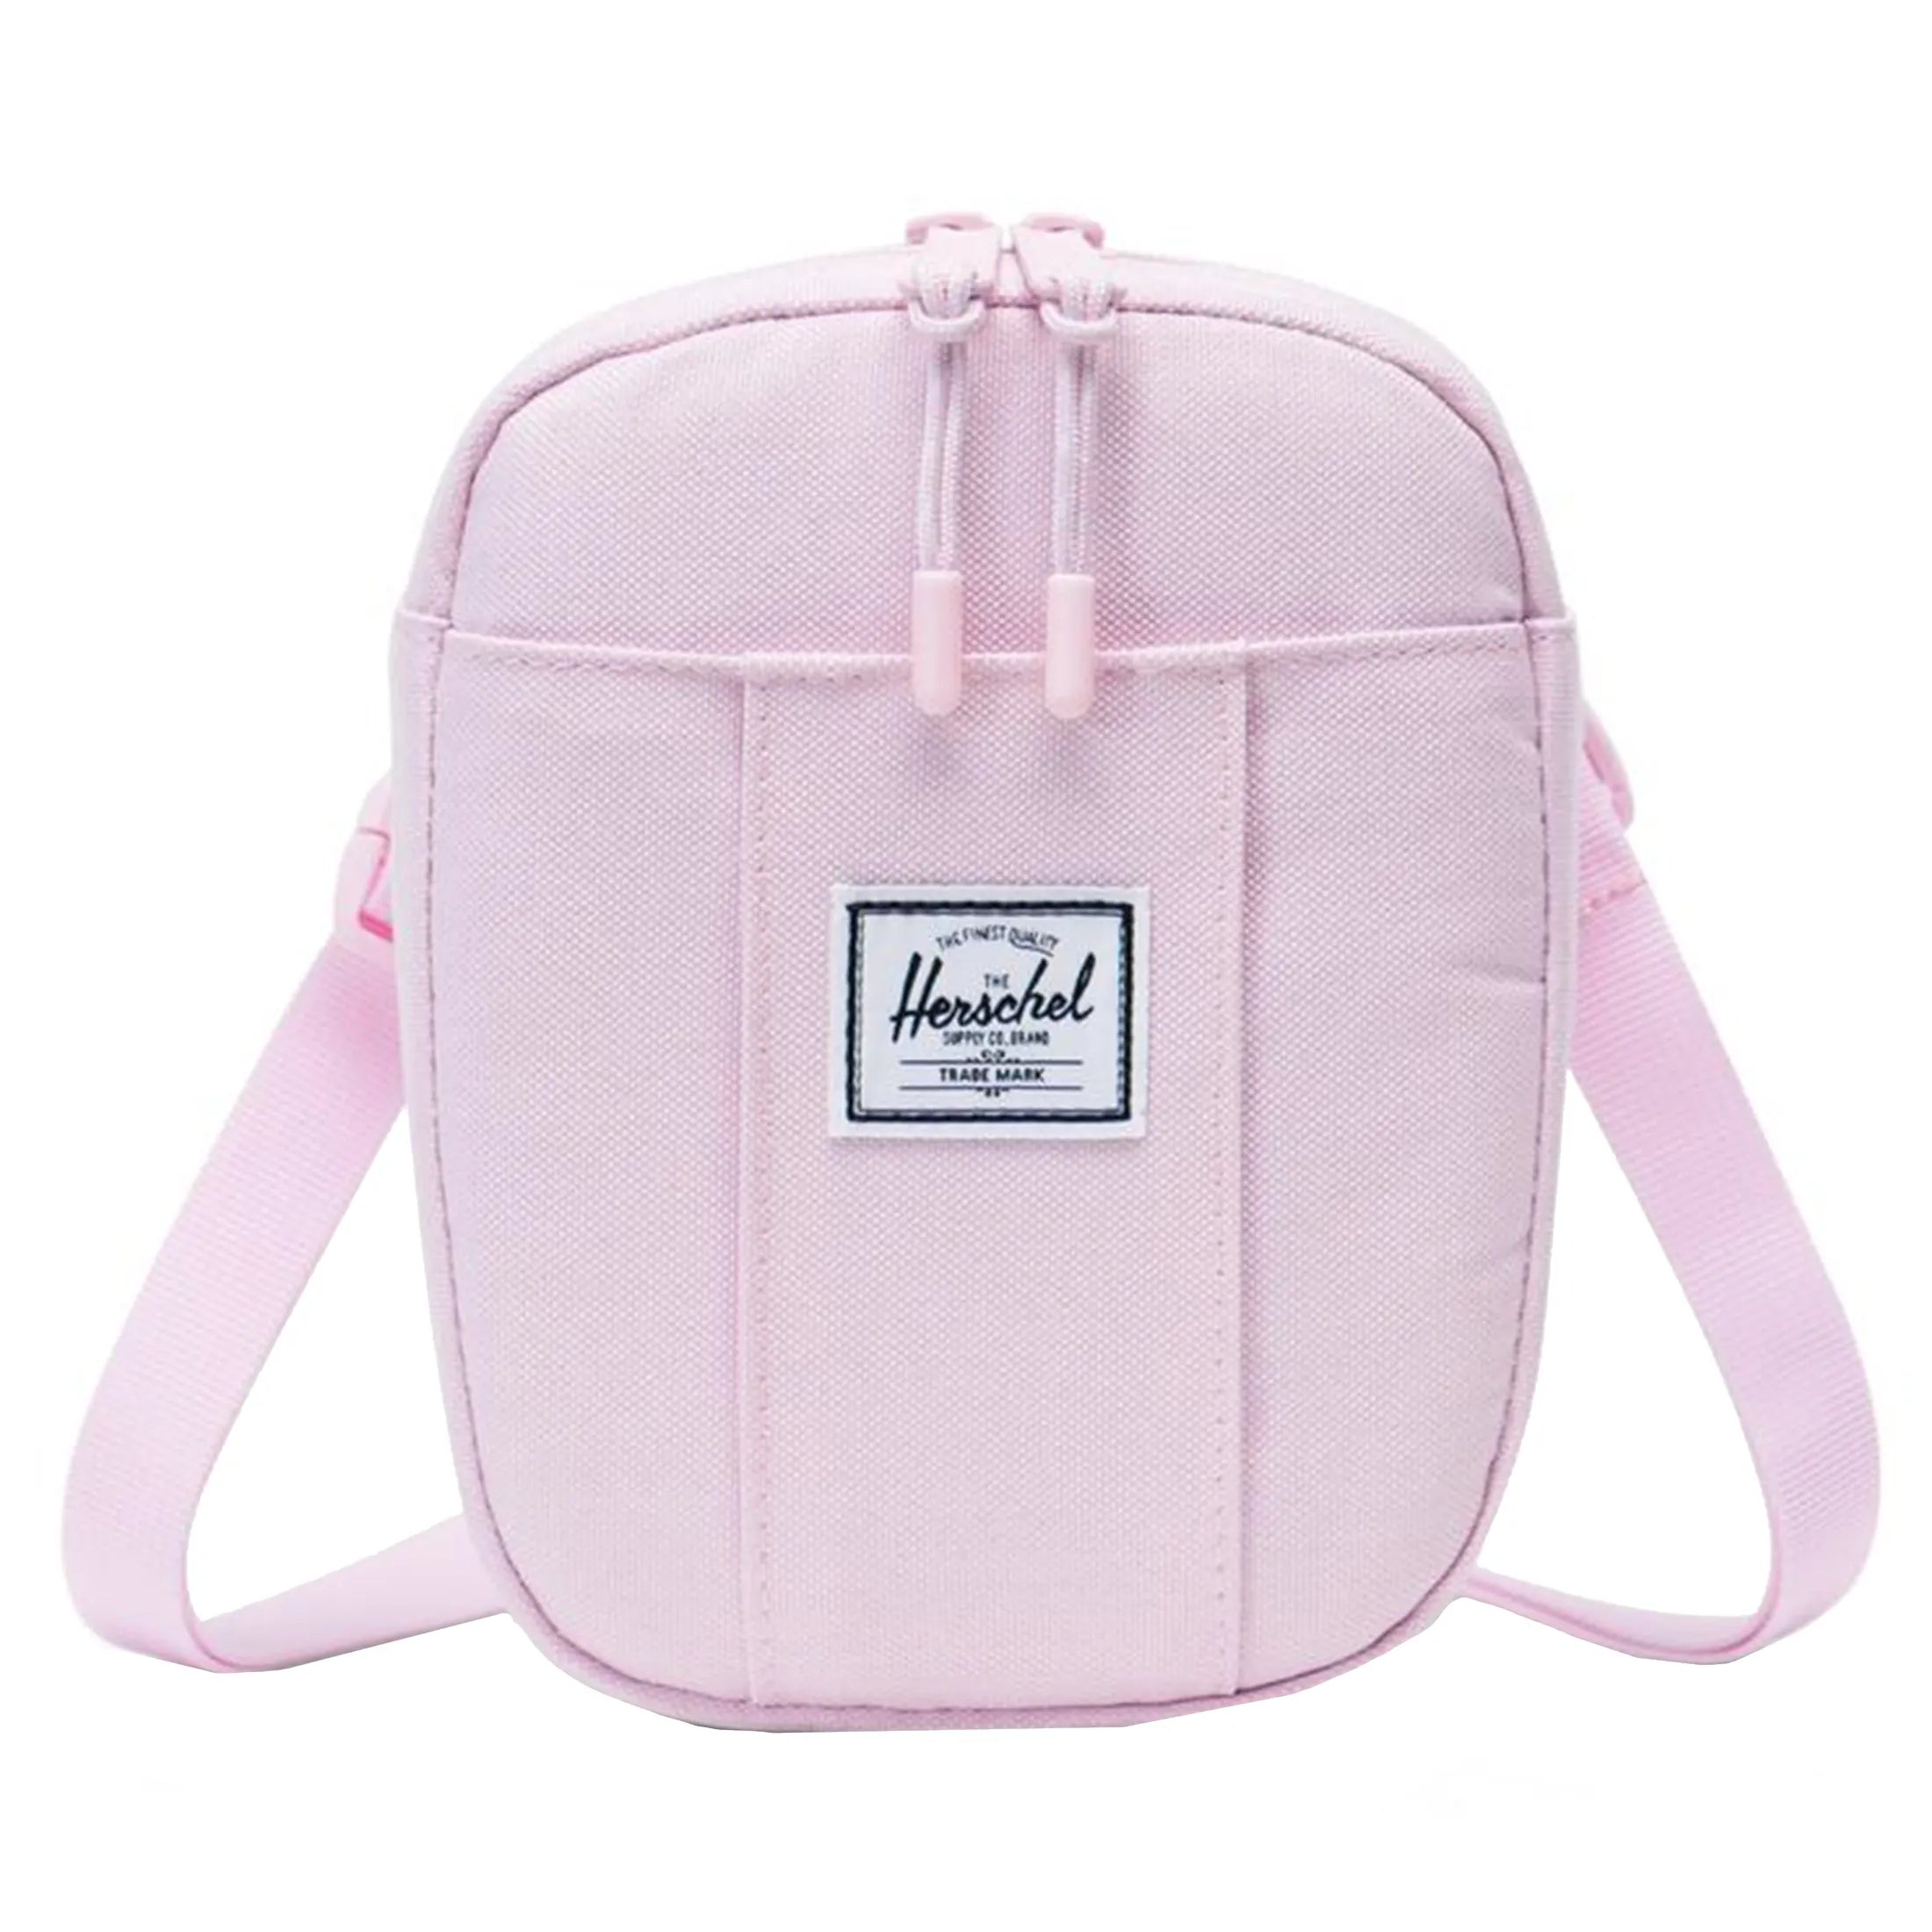 Herschel Bags Collection Cruz Crossbody Umhängetasche 18 cm - pink lady crosshatch